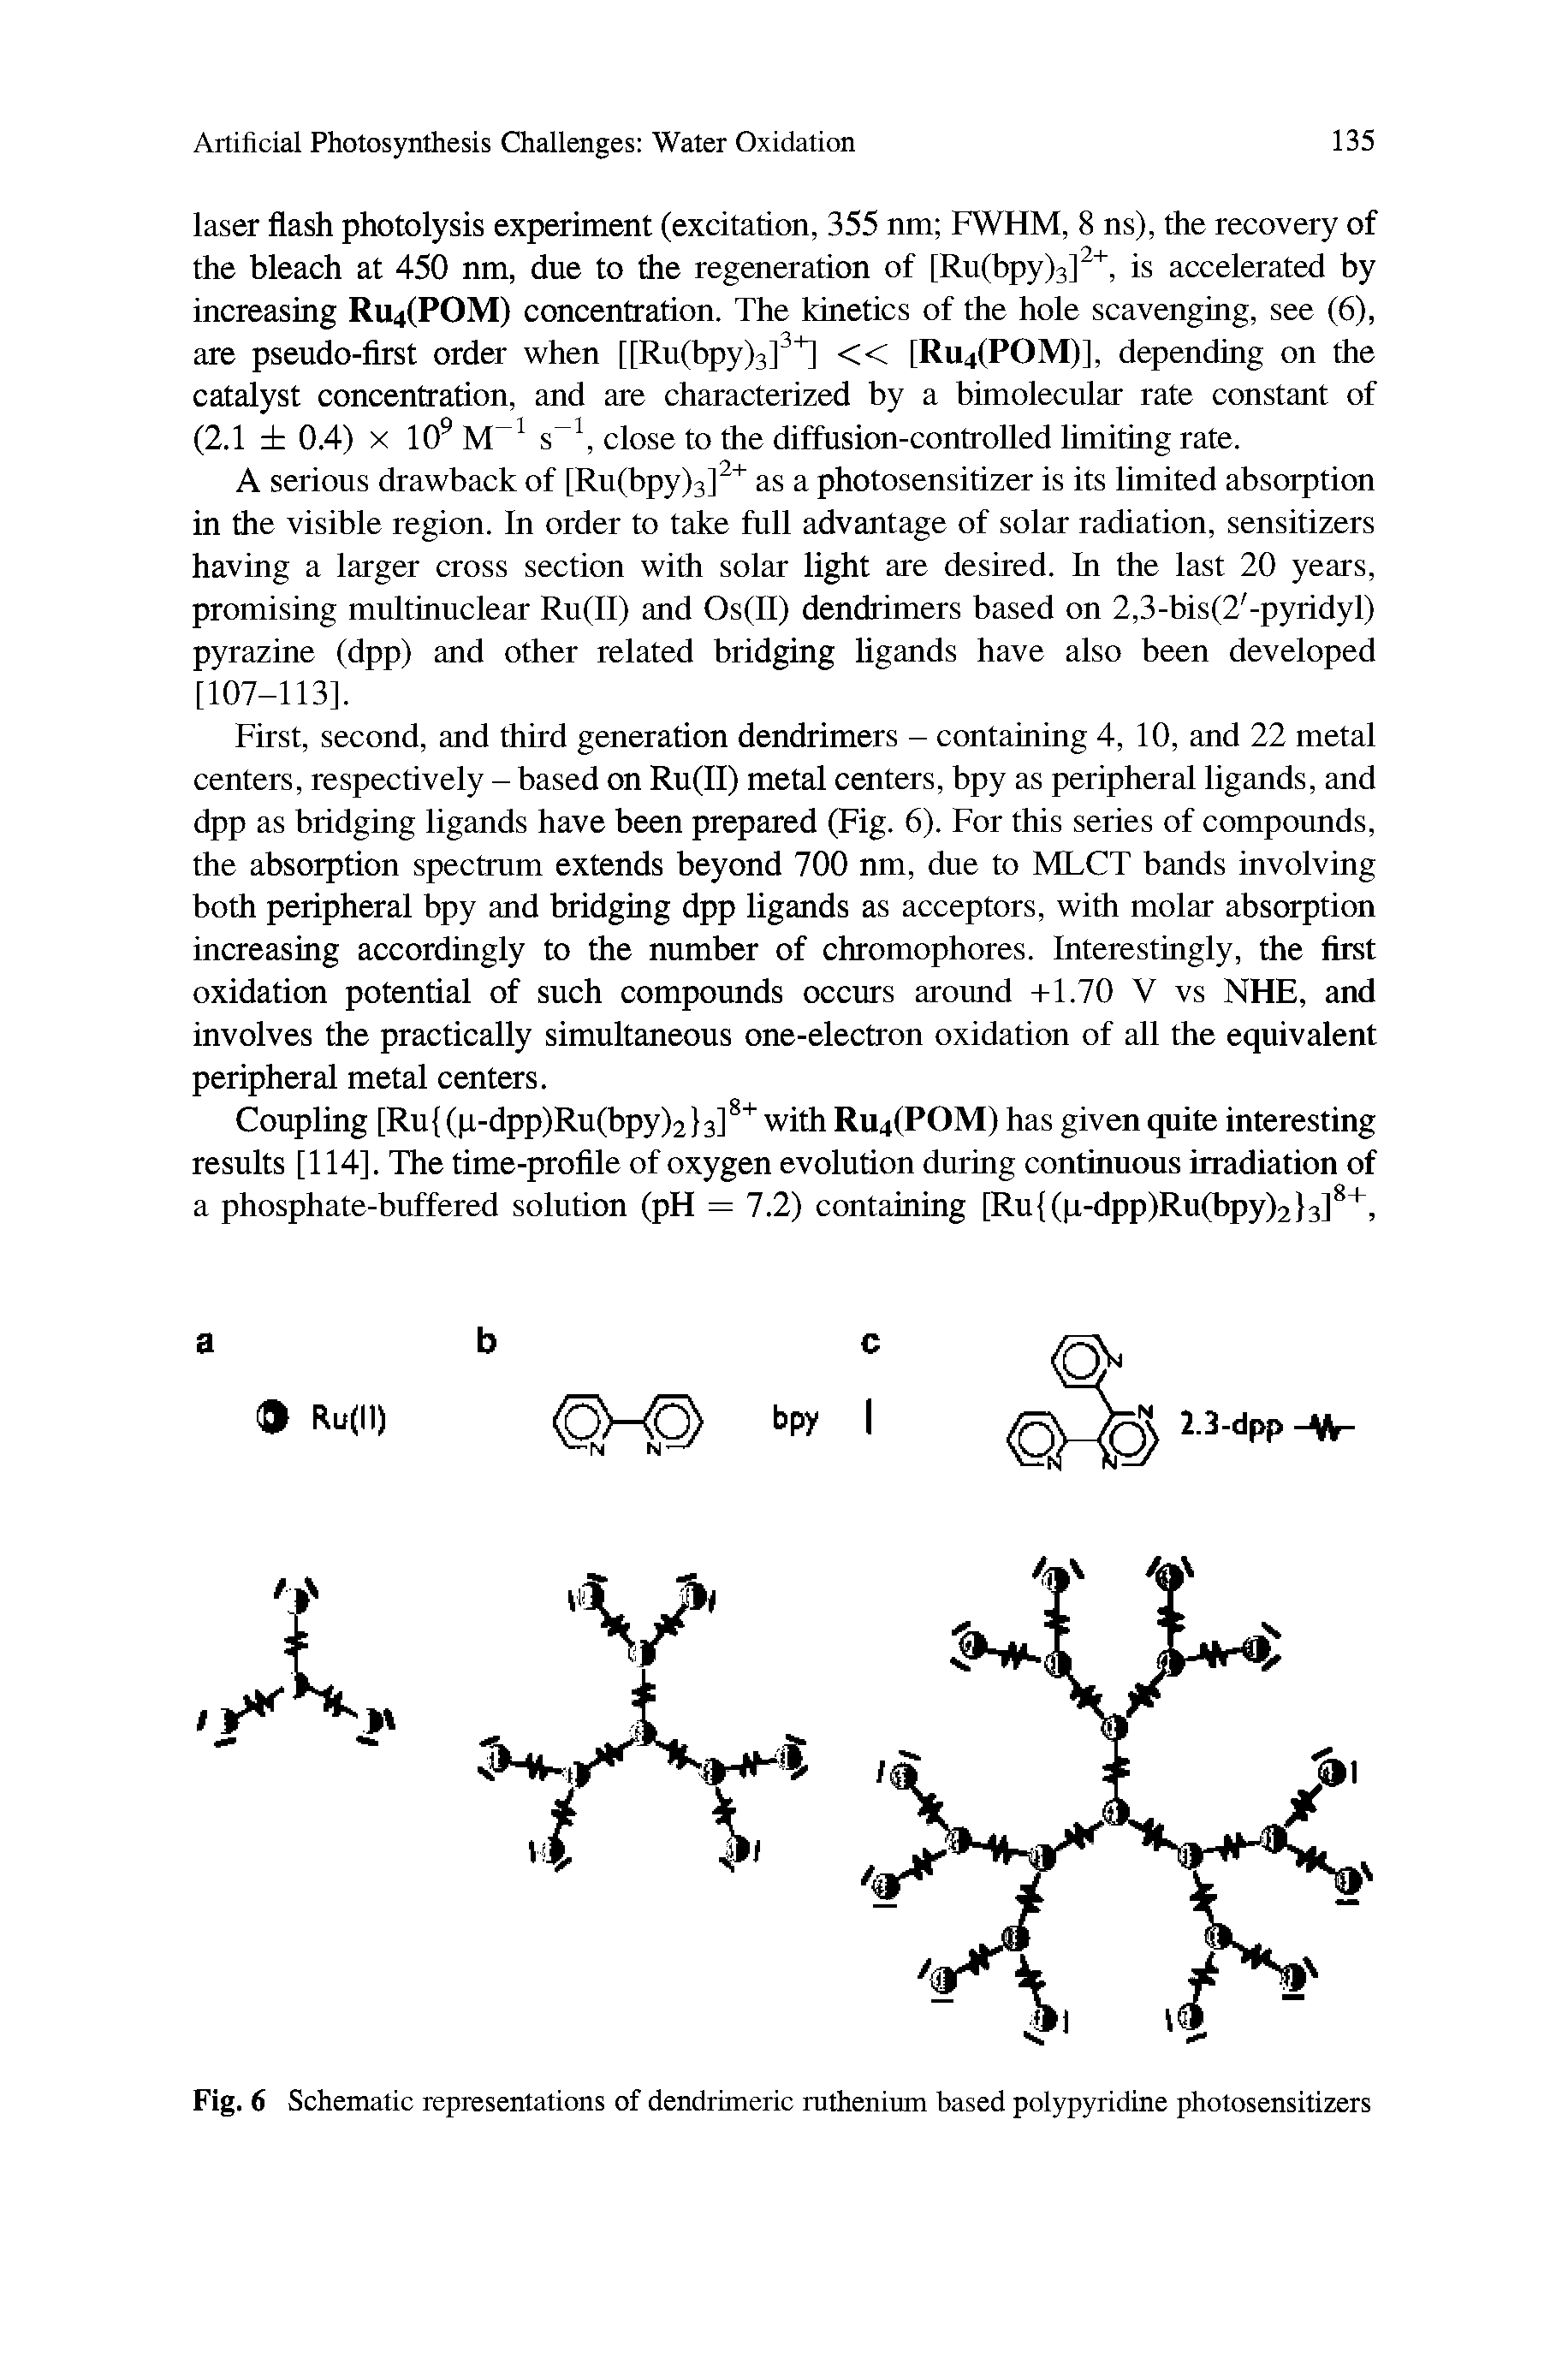 Fig. 6 Schematic representations of dendrimeric ruthenium based polypyridine photosensitizers...